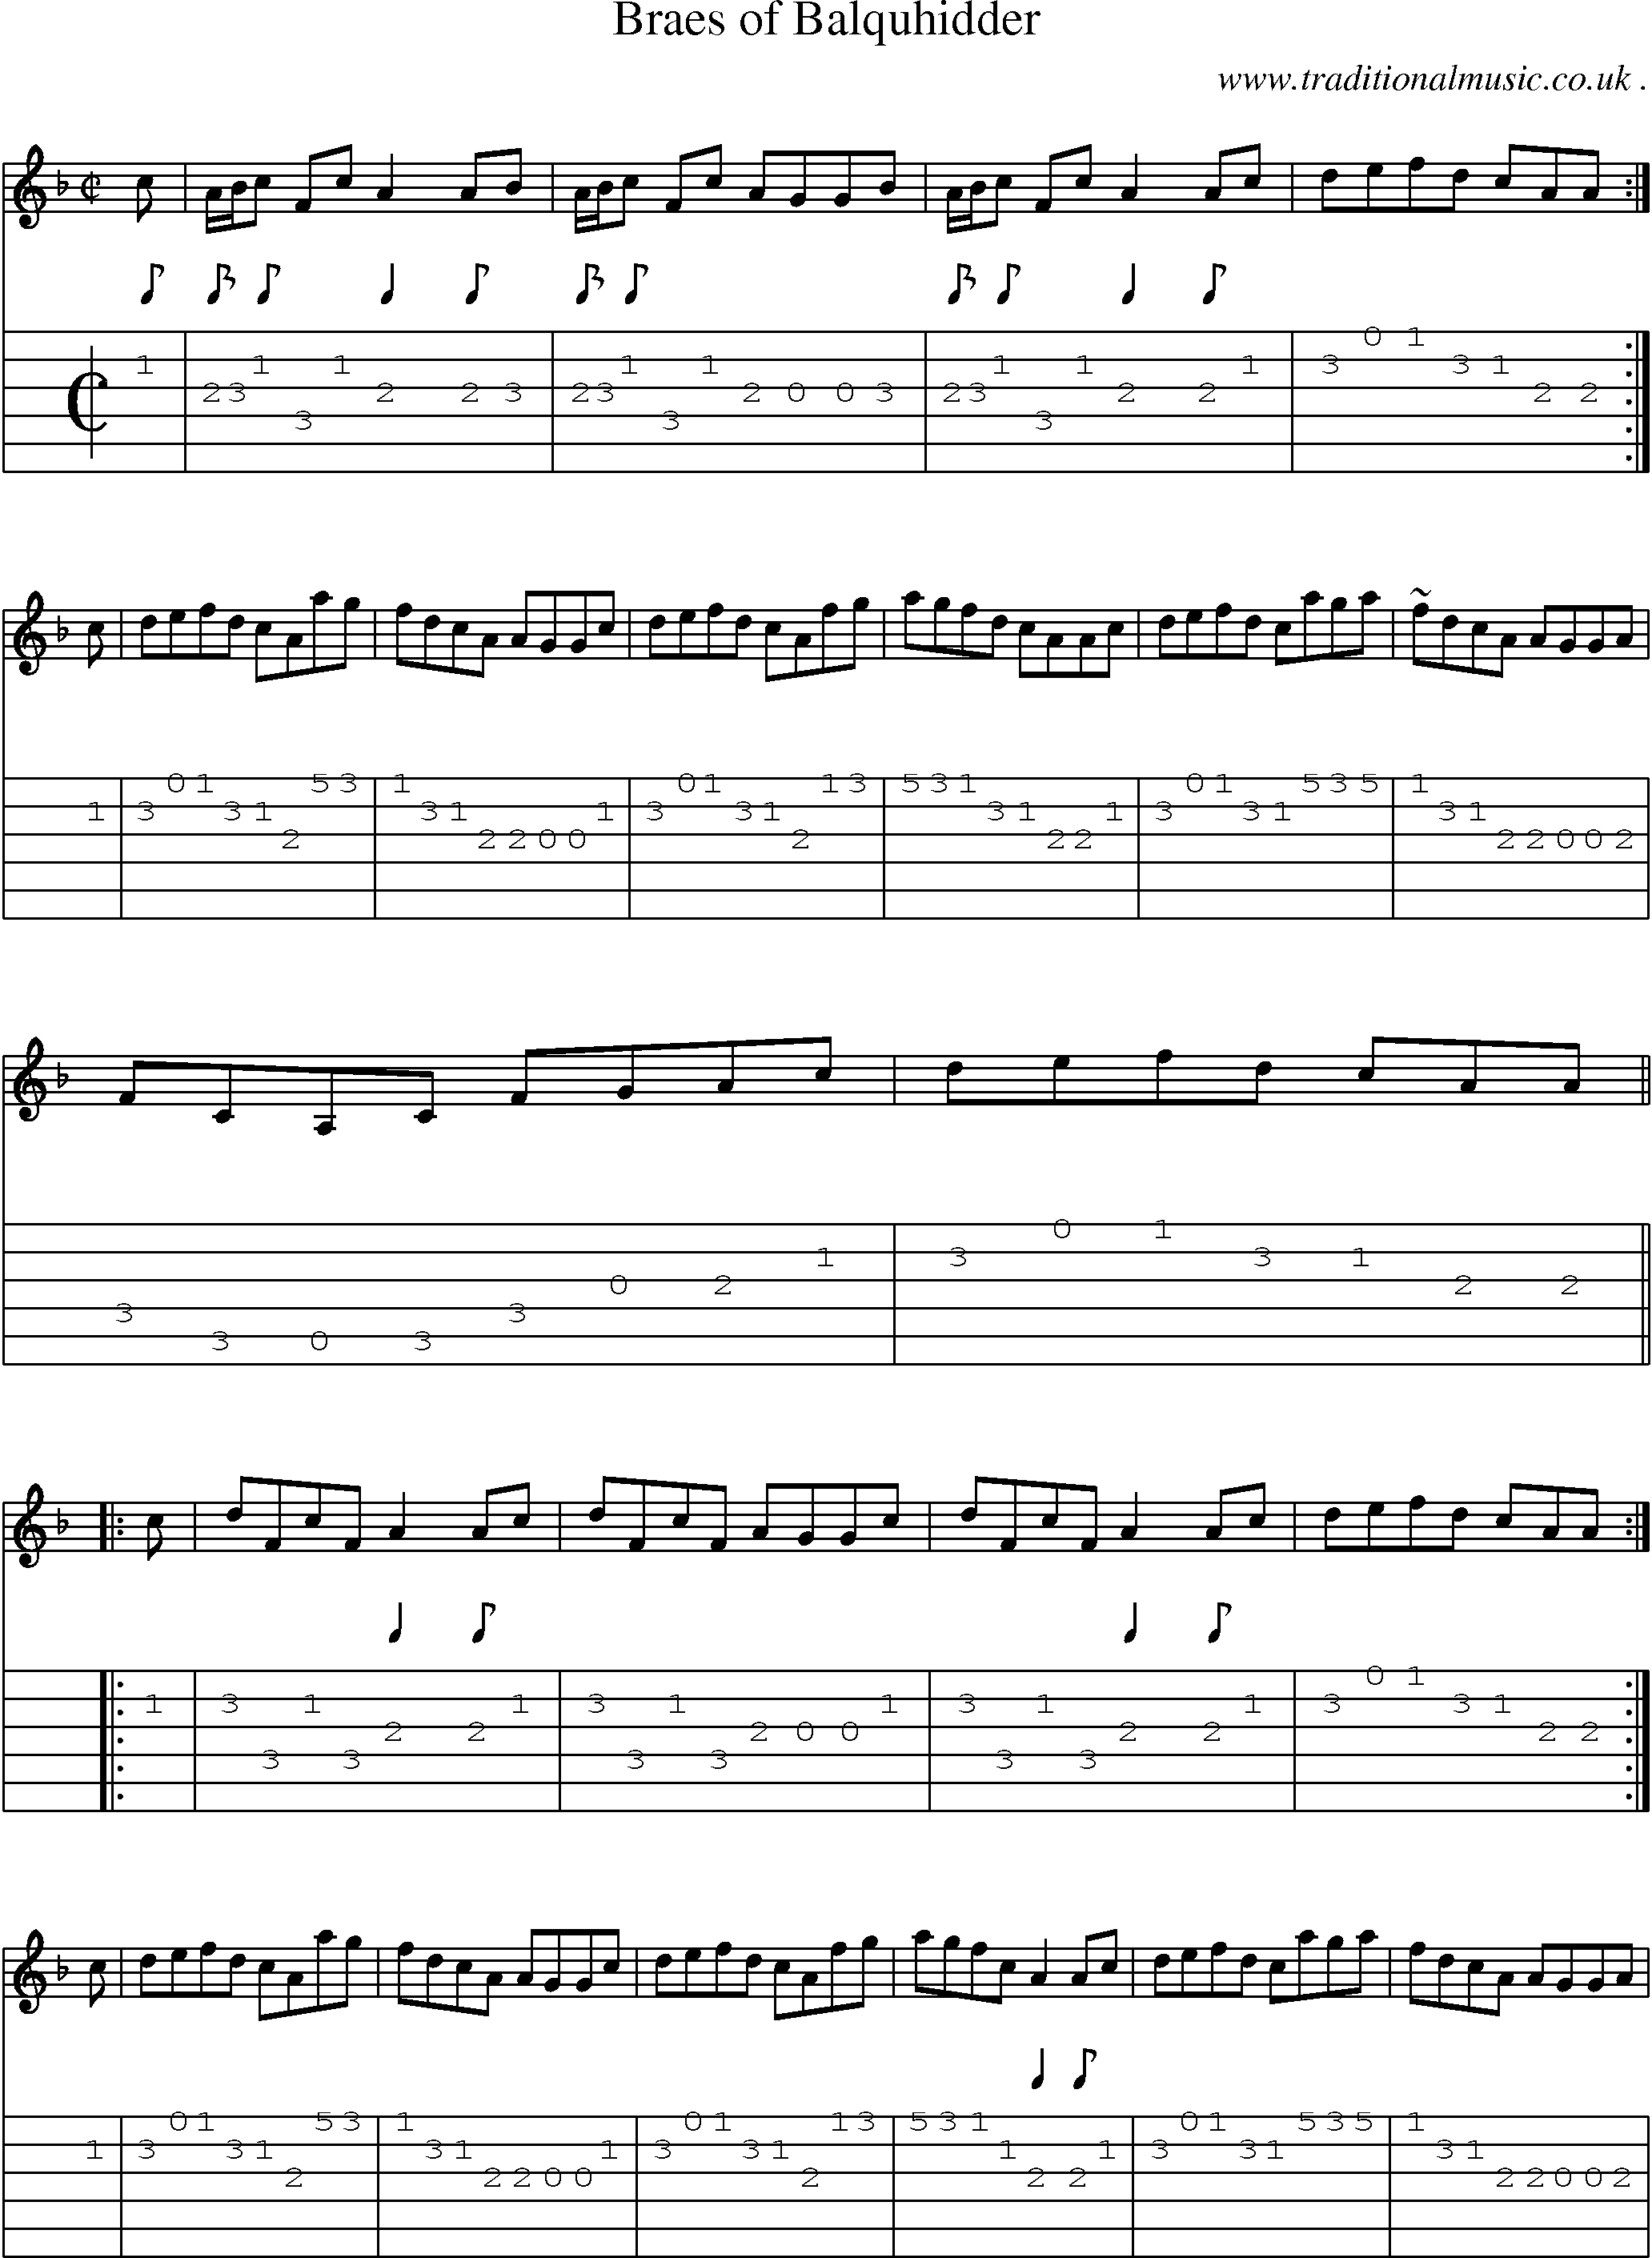 Sheet-music  score, Chords and Guitar Tabs for Braes Of Balquhidder